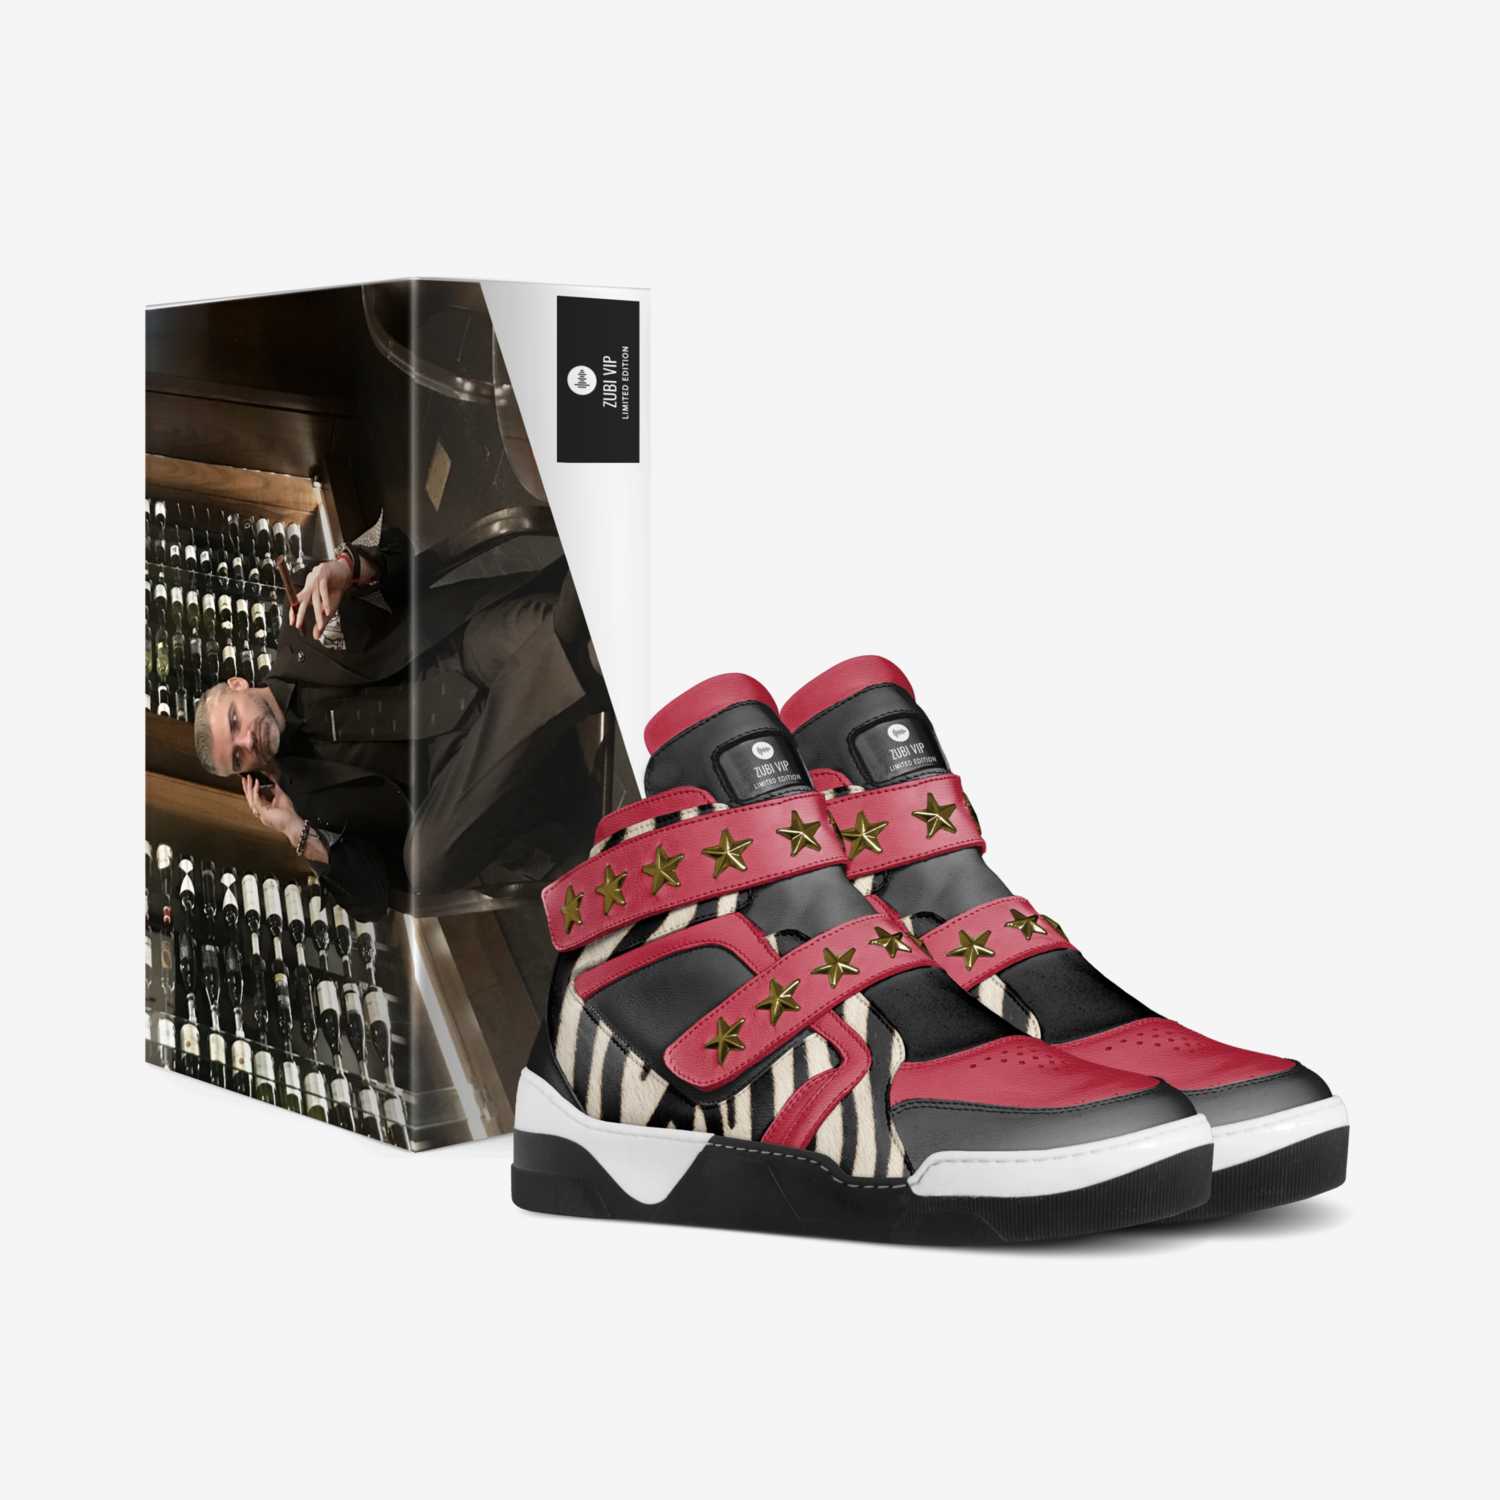 ZUBI VIP custom made in Italy shoes by Carlos Zubizarreta | Box view